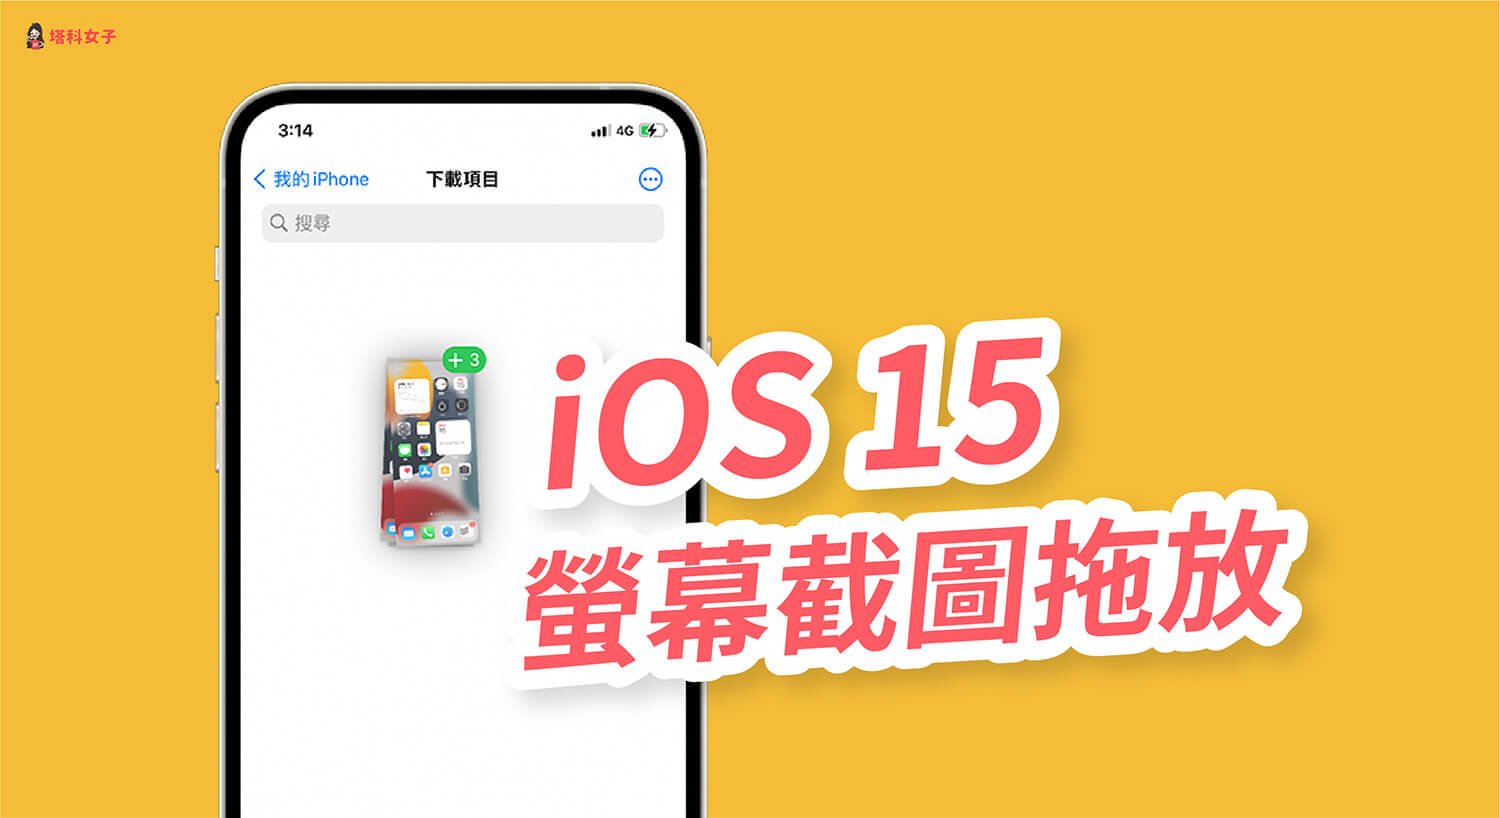 iOS 15 螢幕截圖支援「拖放」到檔案、備忘錄、訊息、照片 App